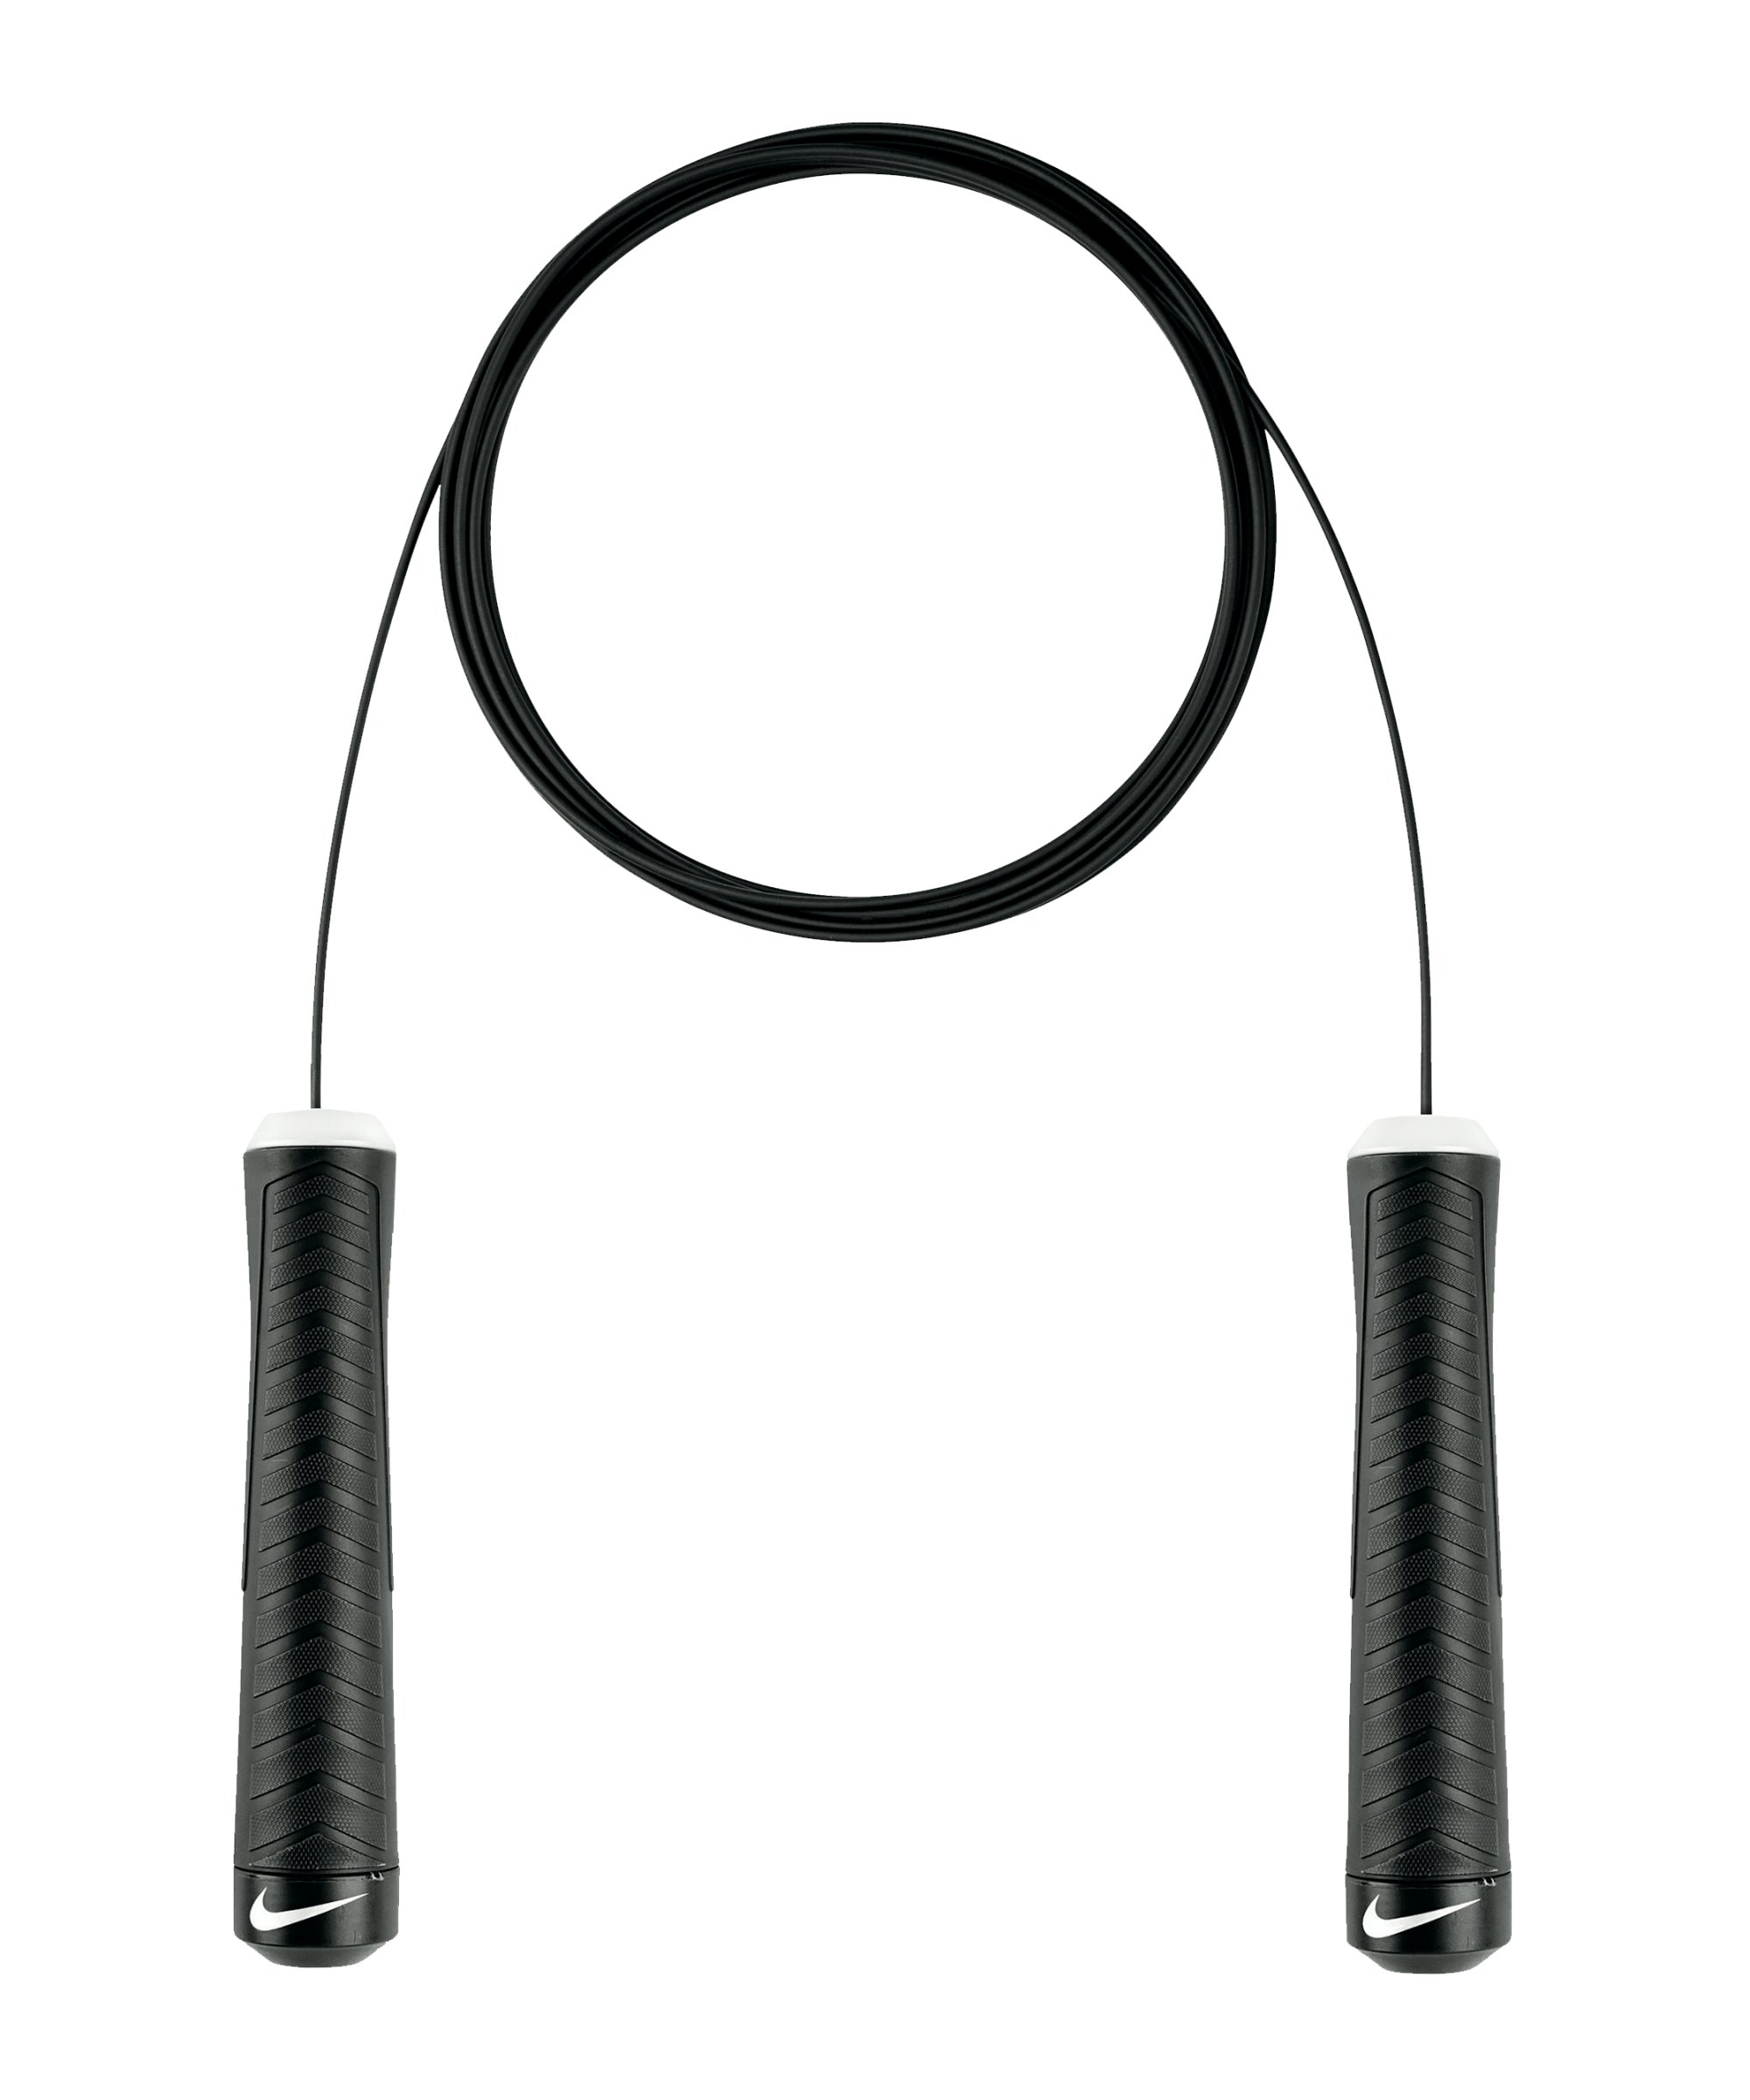 Nike Fundamental Springseil Training Schwarz F010 - schwarz